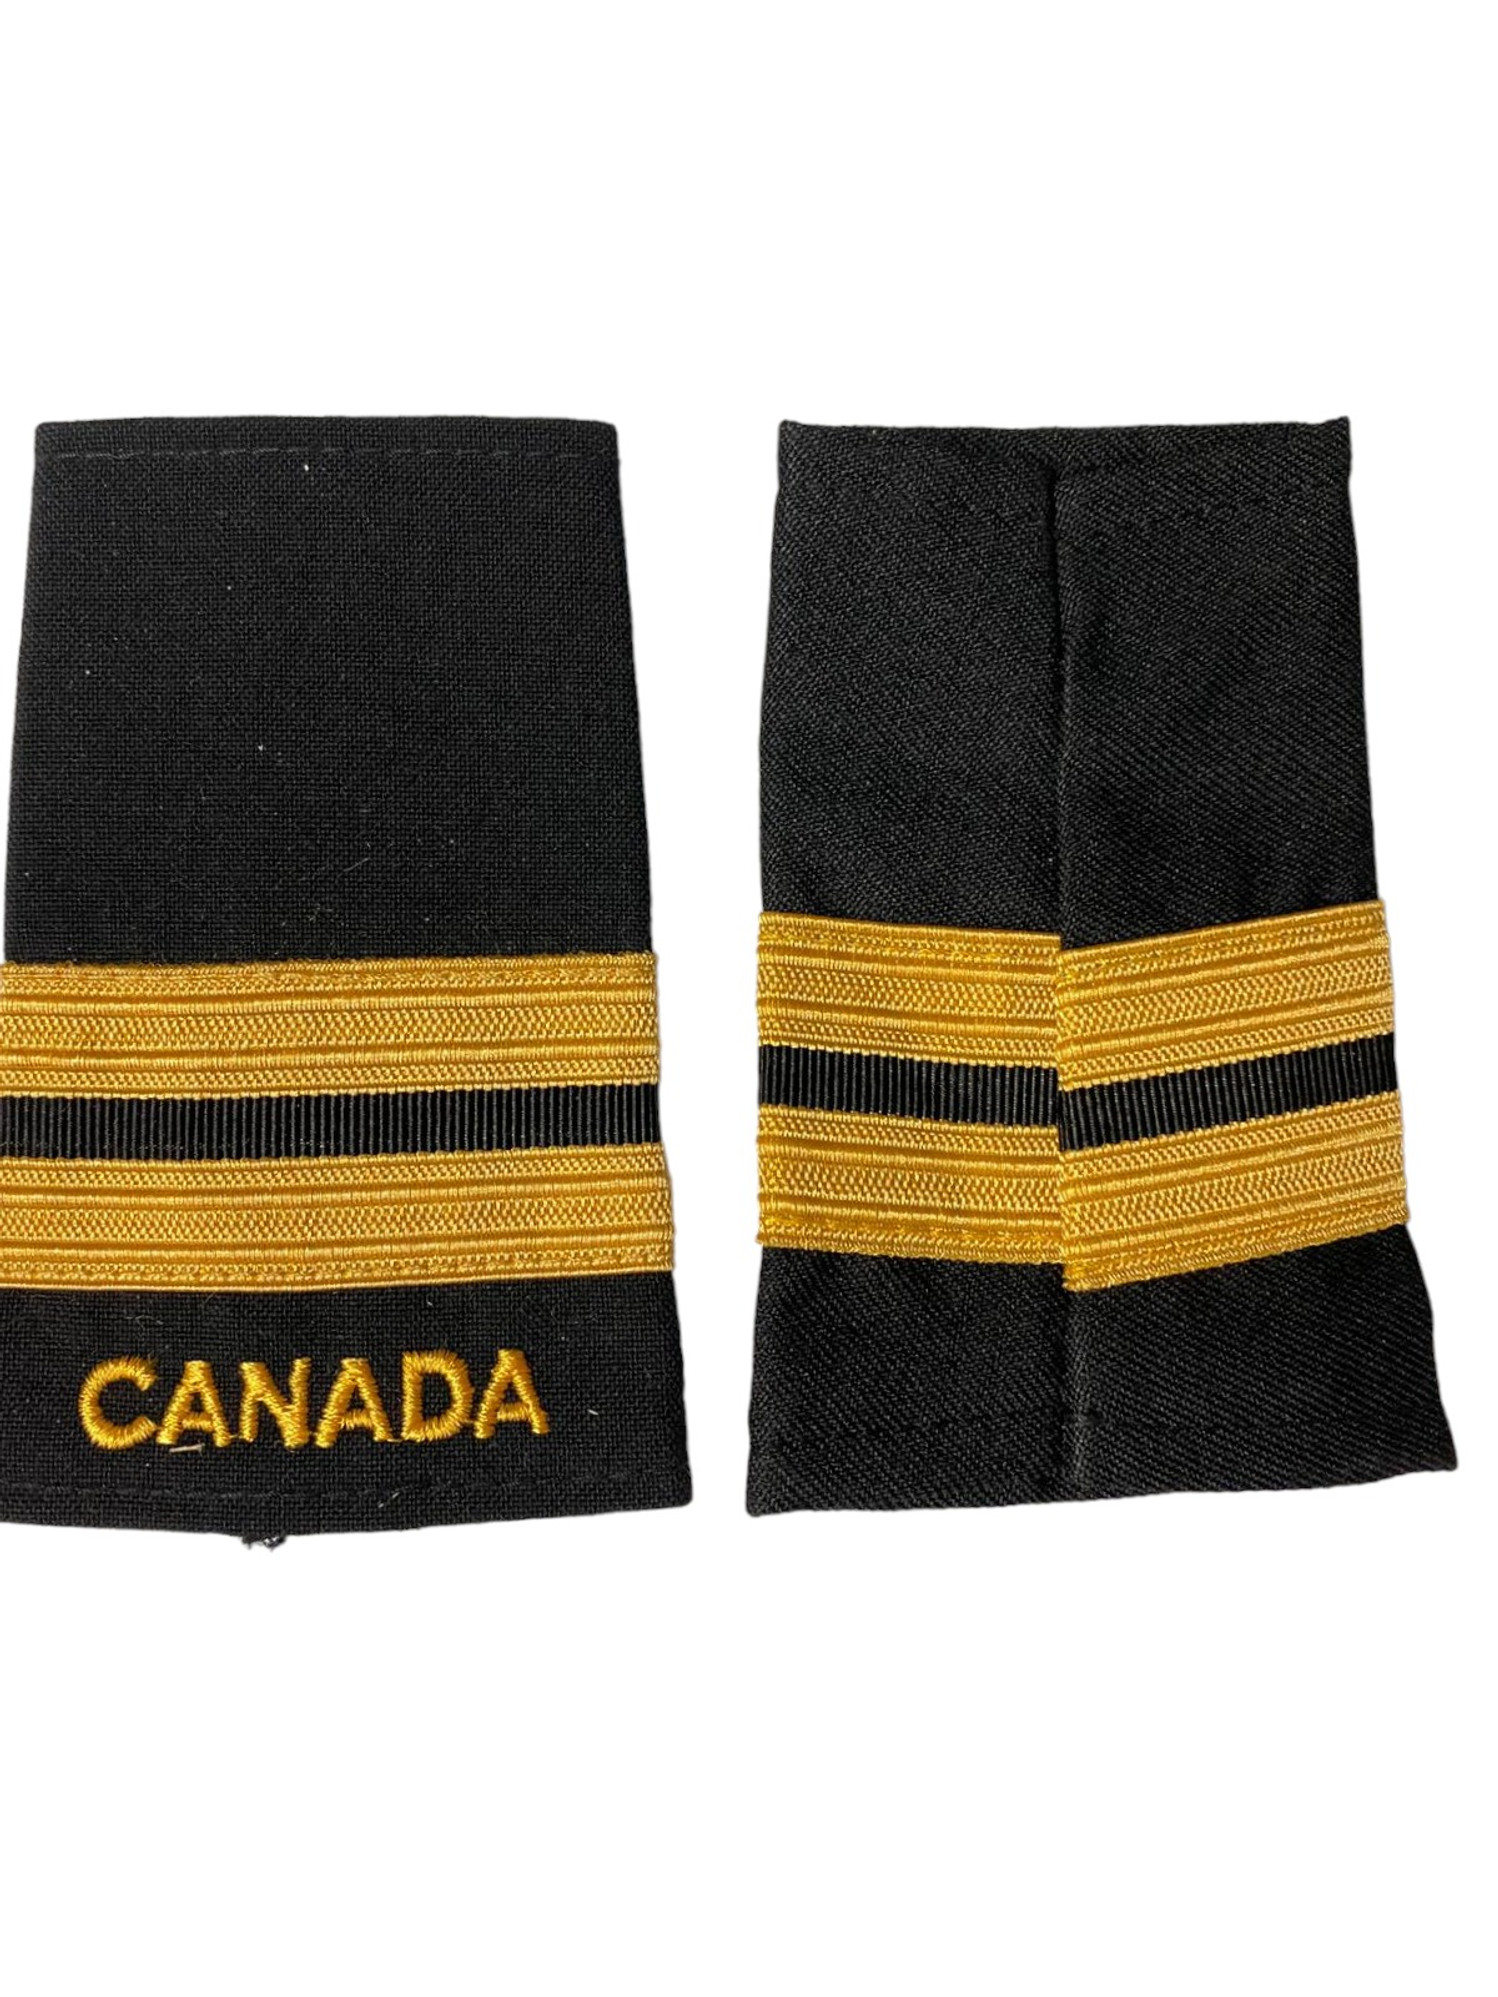 Canadian Armed Forces Rank Epaulets Navy - Lieutenant